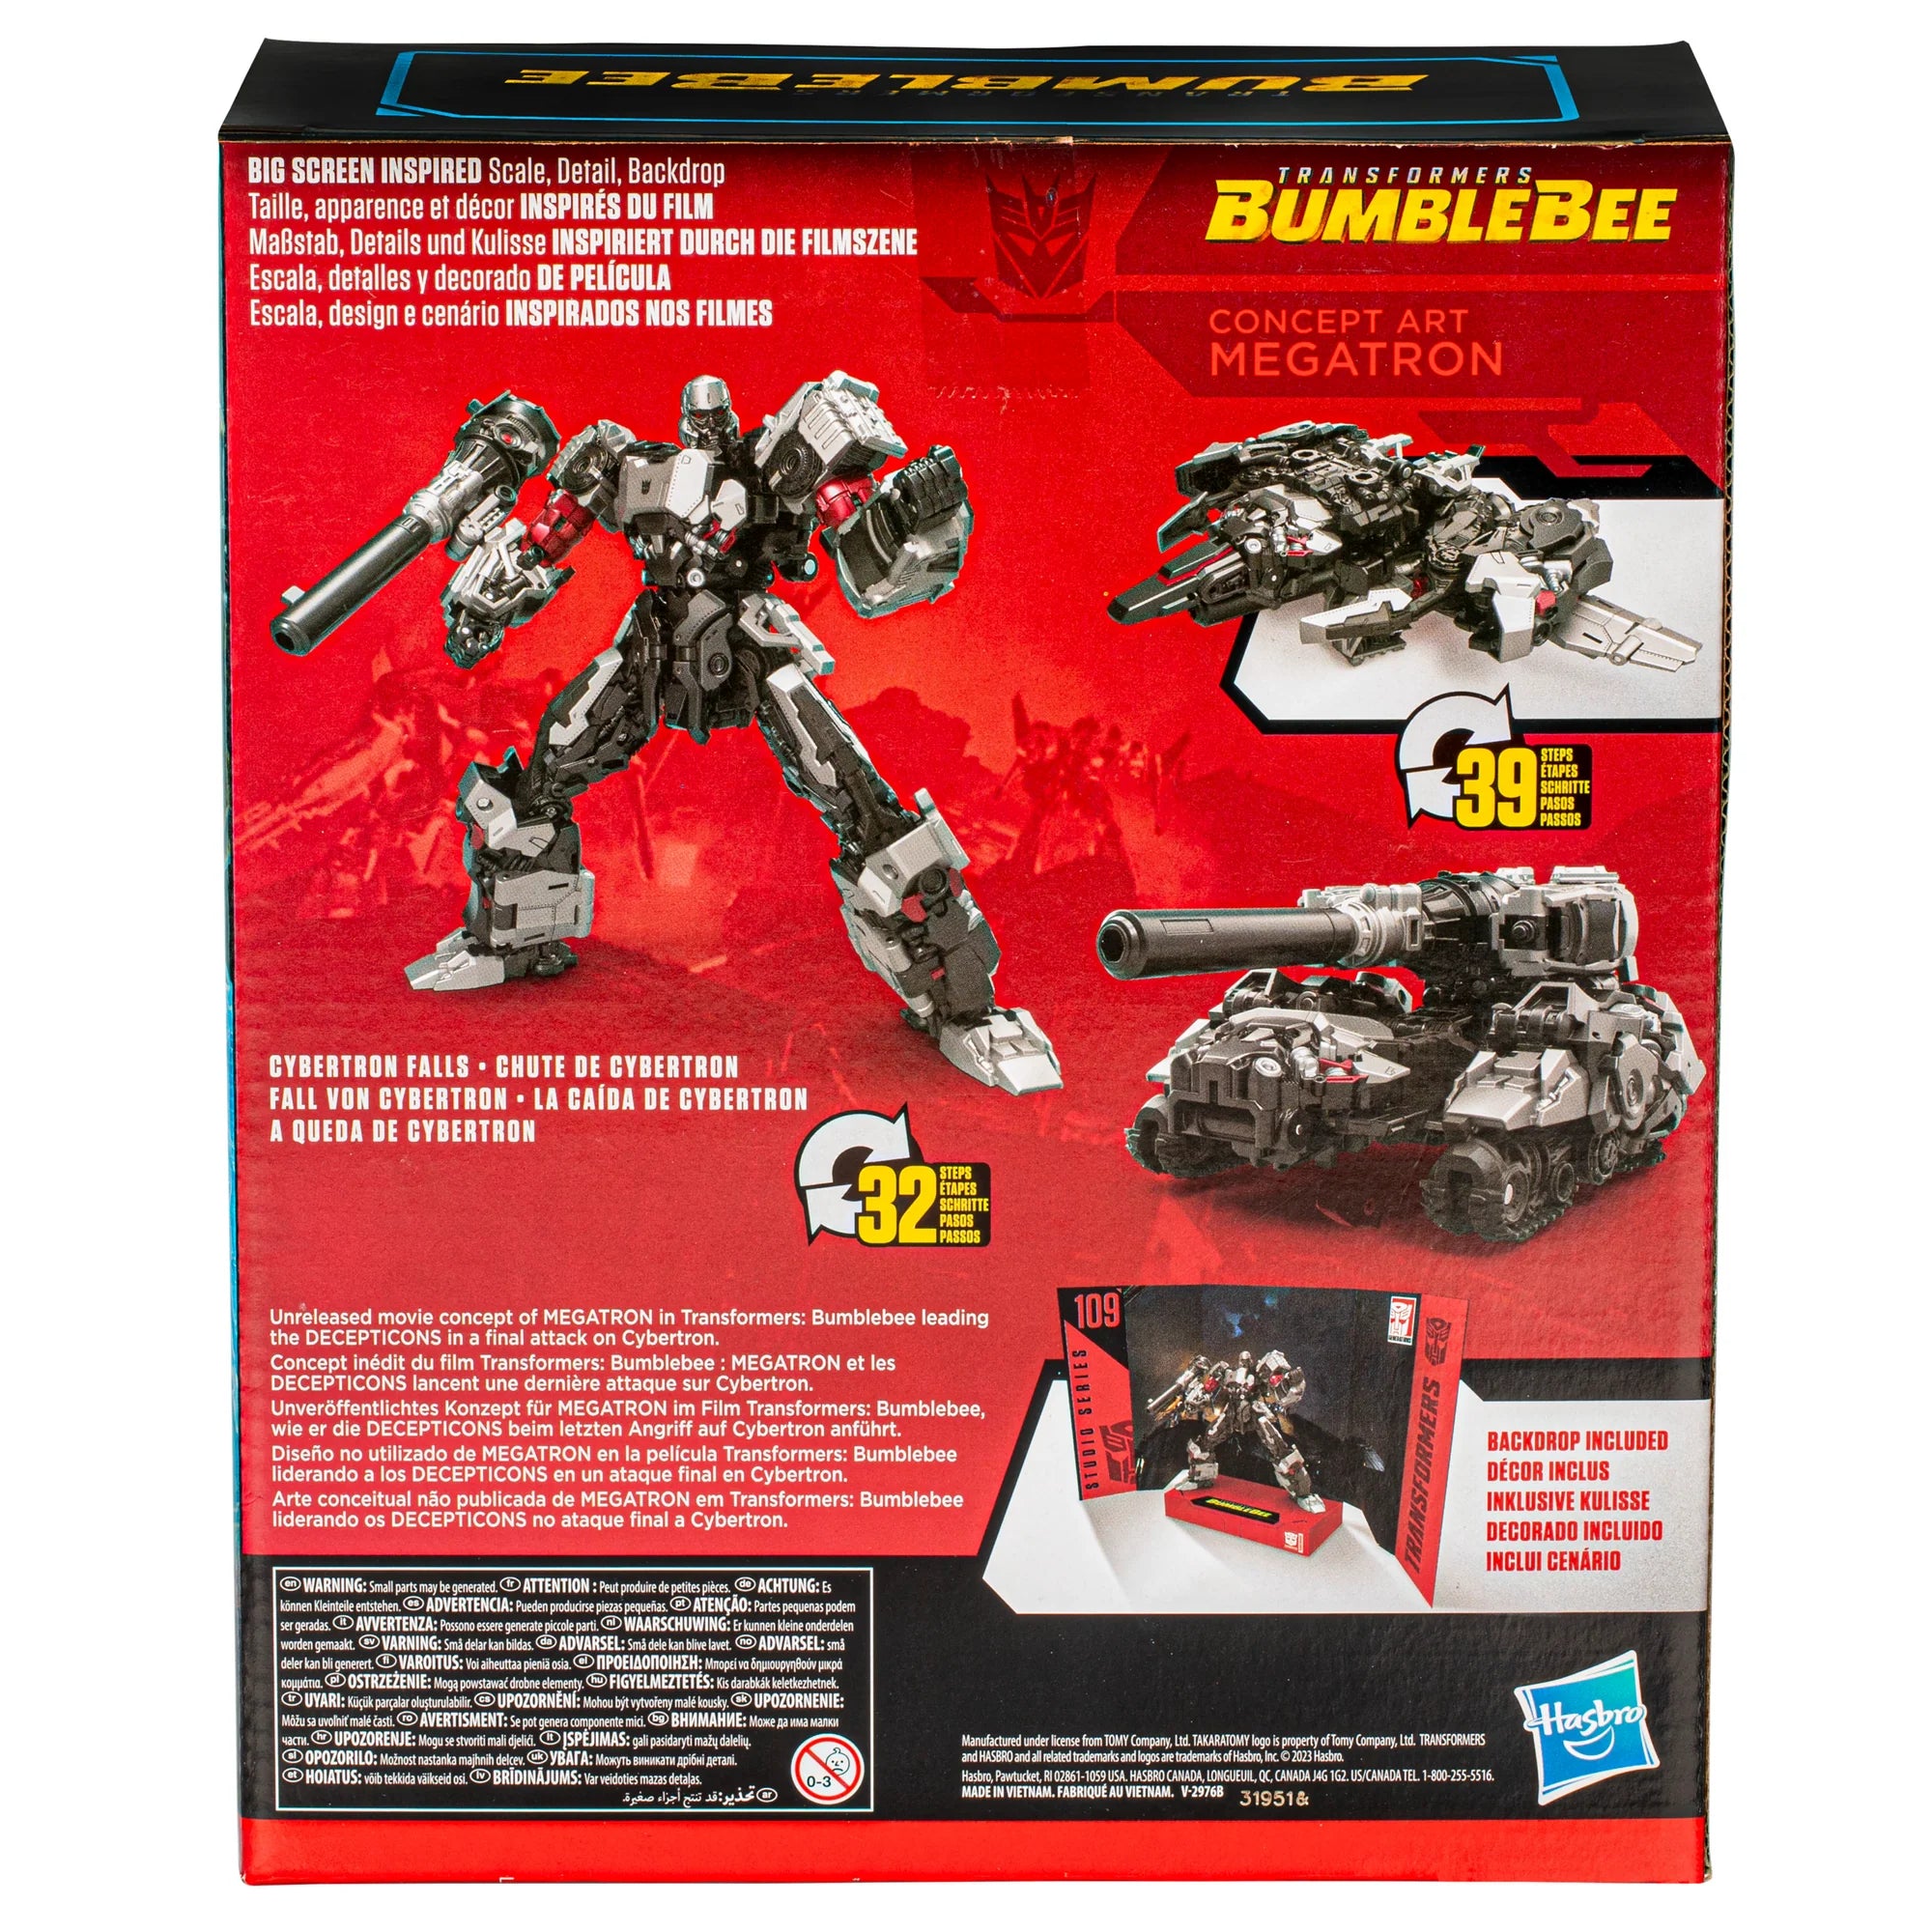 Transformers Studio Series Leader Transformers: Bumblebee 109 Concept Art Megatron Figure